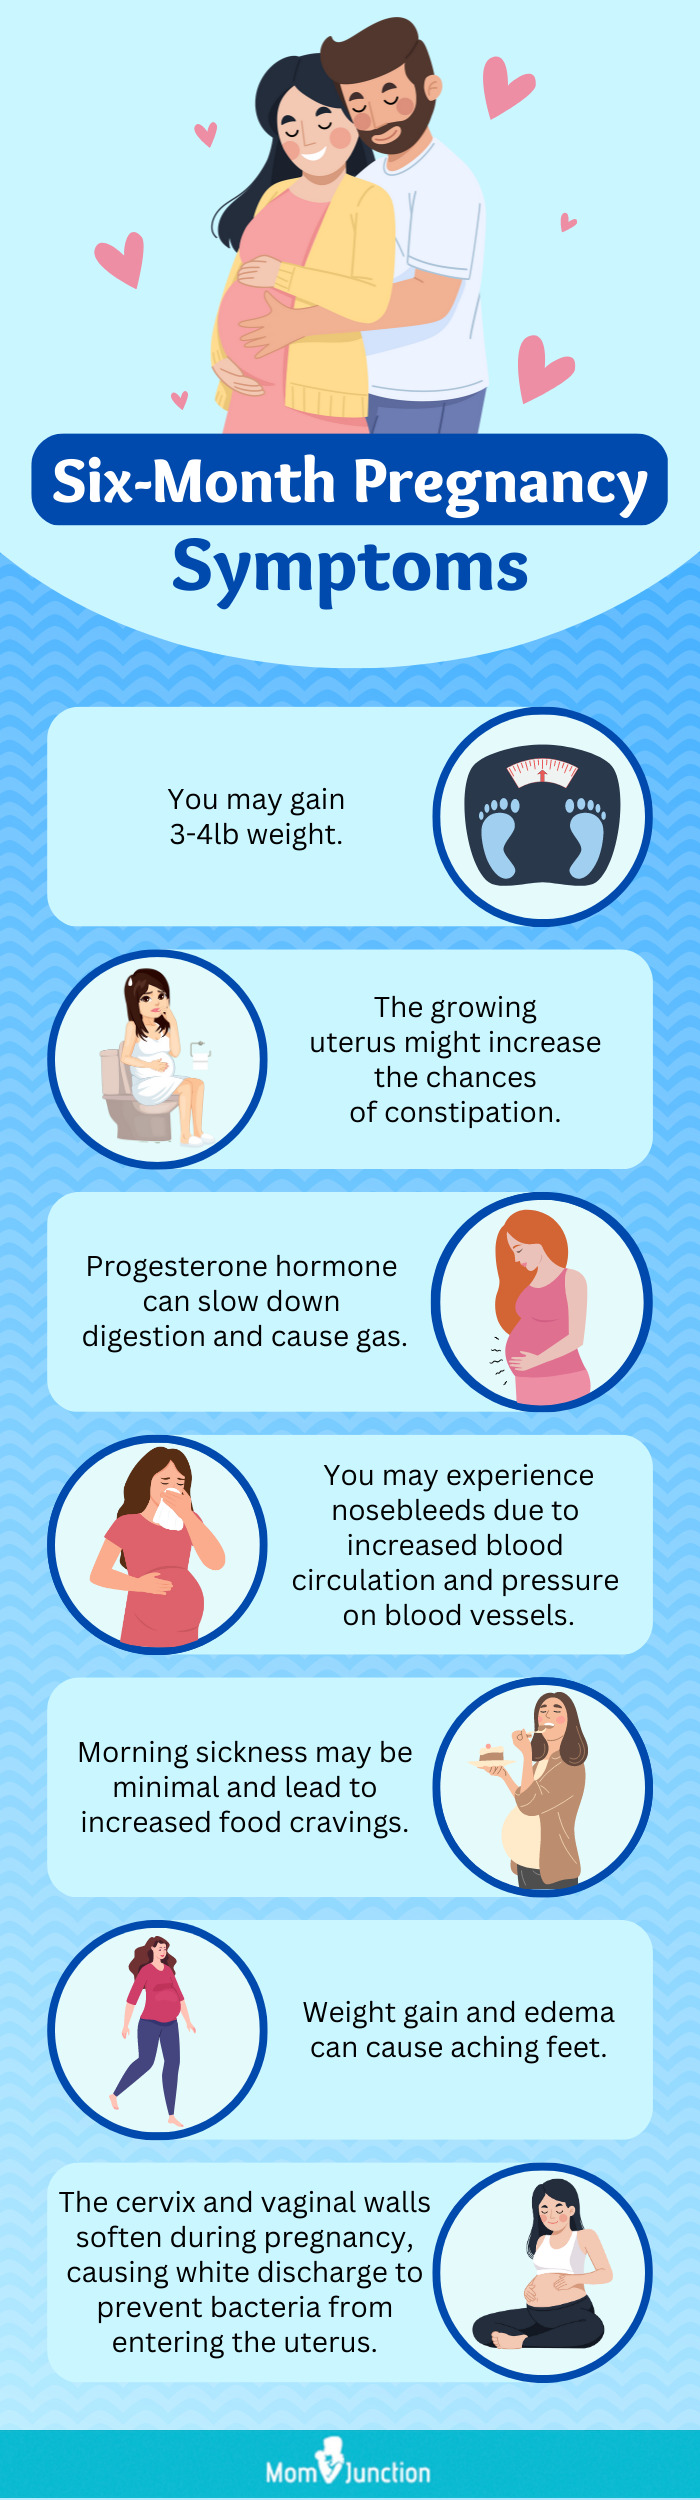 sixth month pregnancy symptoms (infographic)